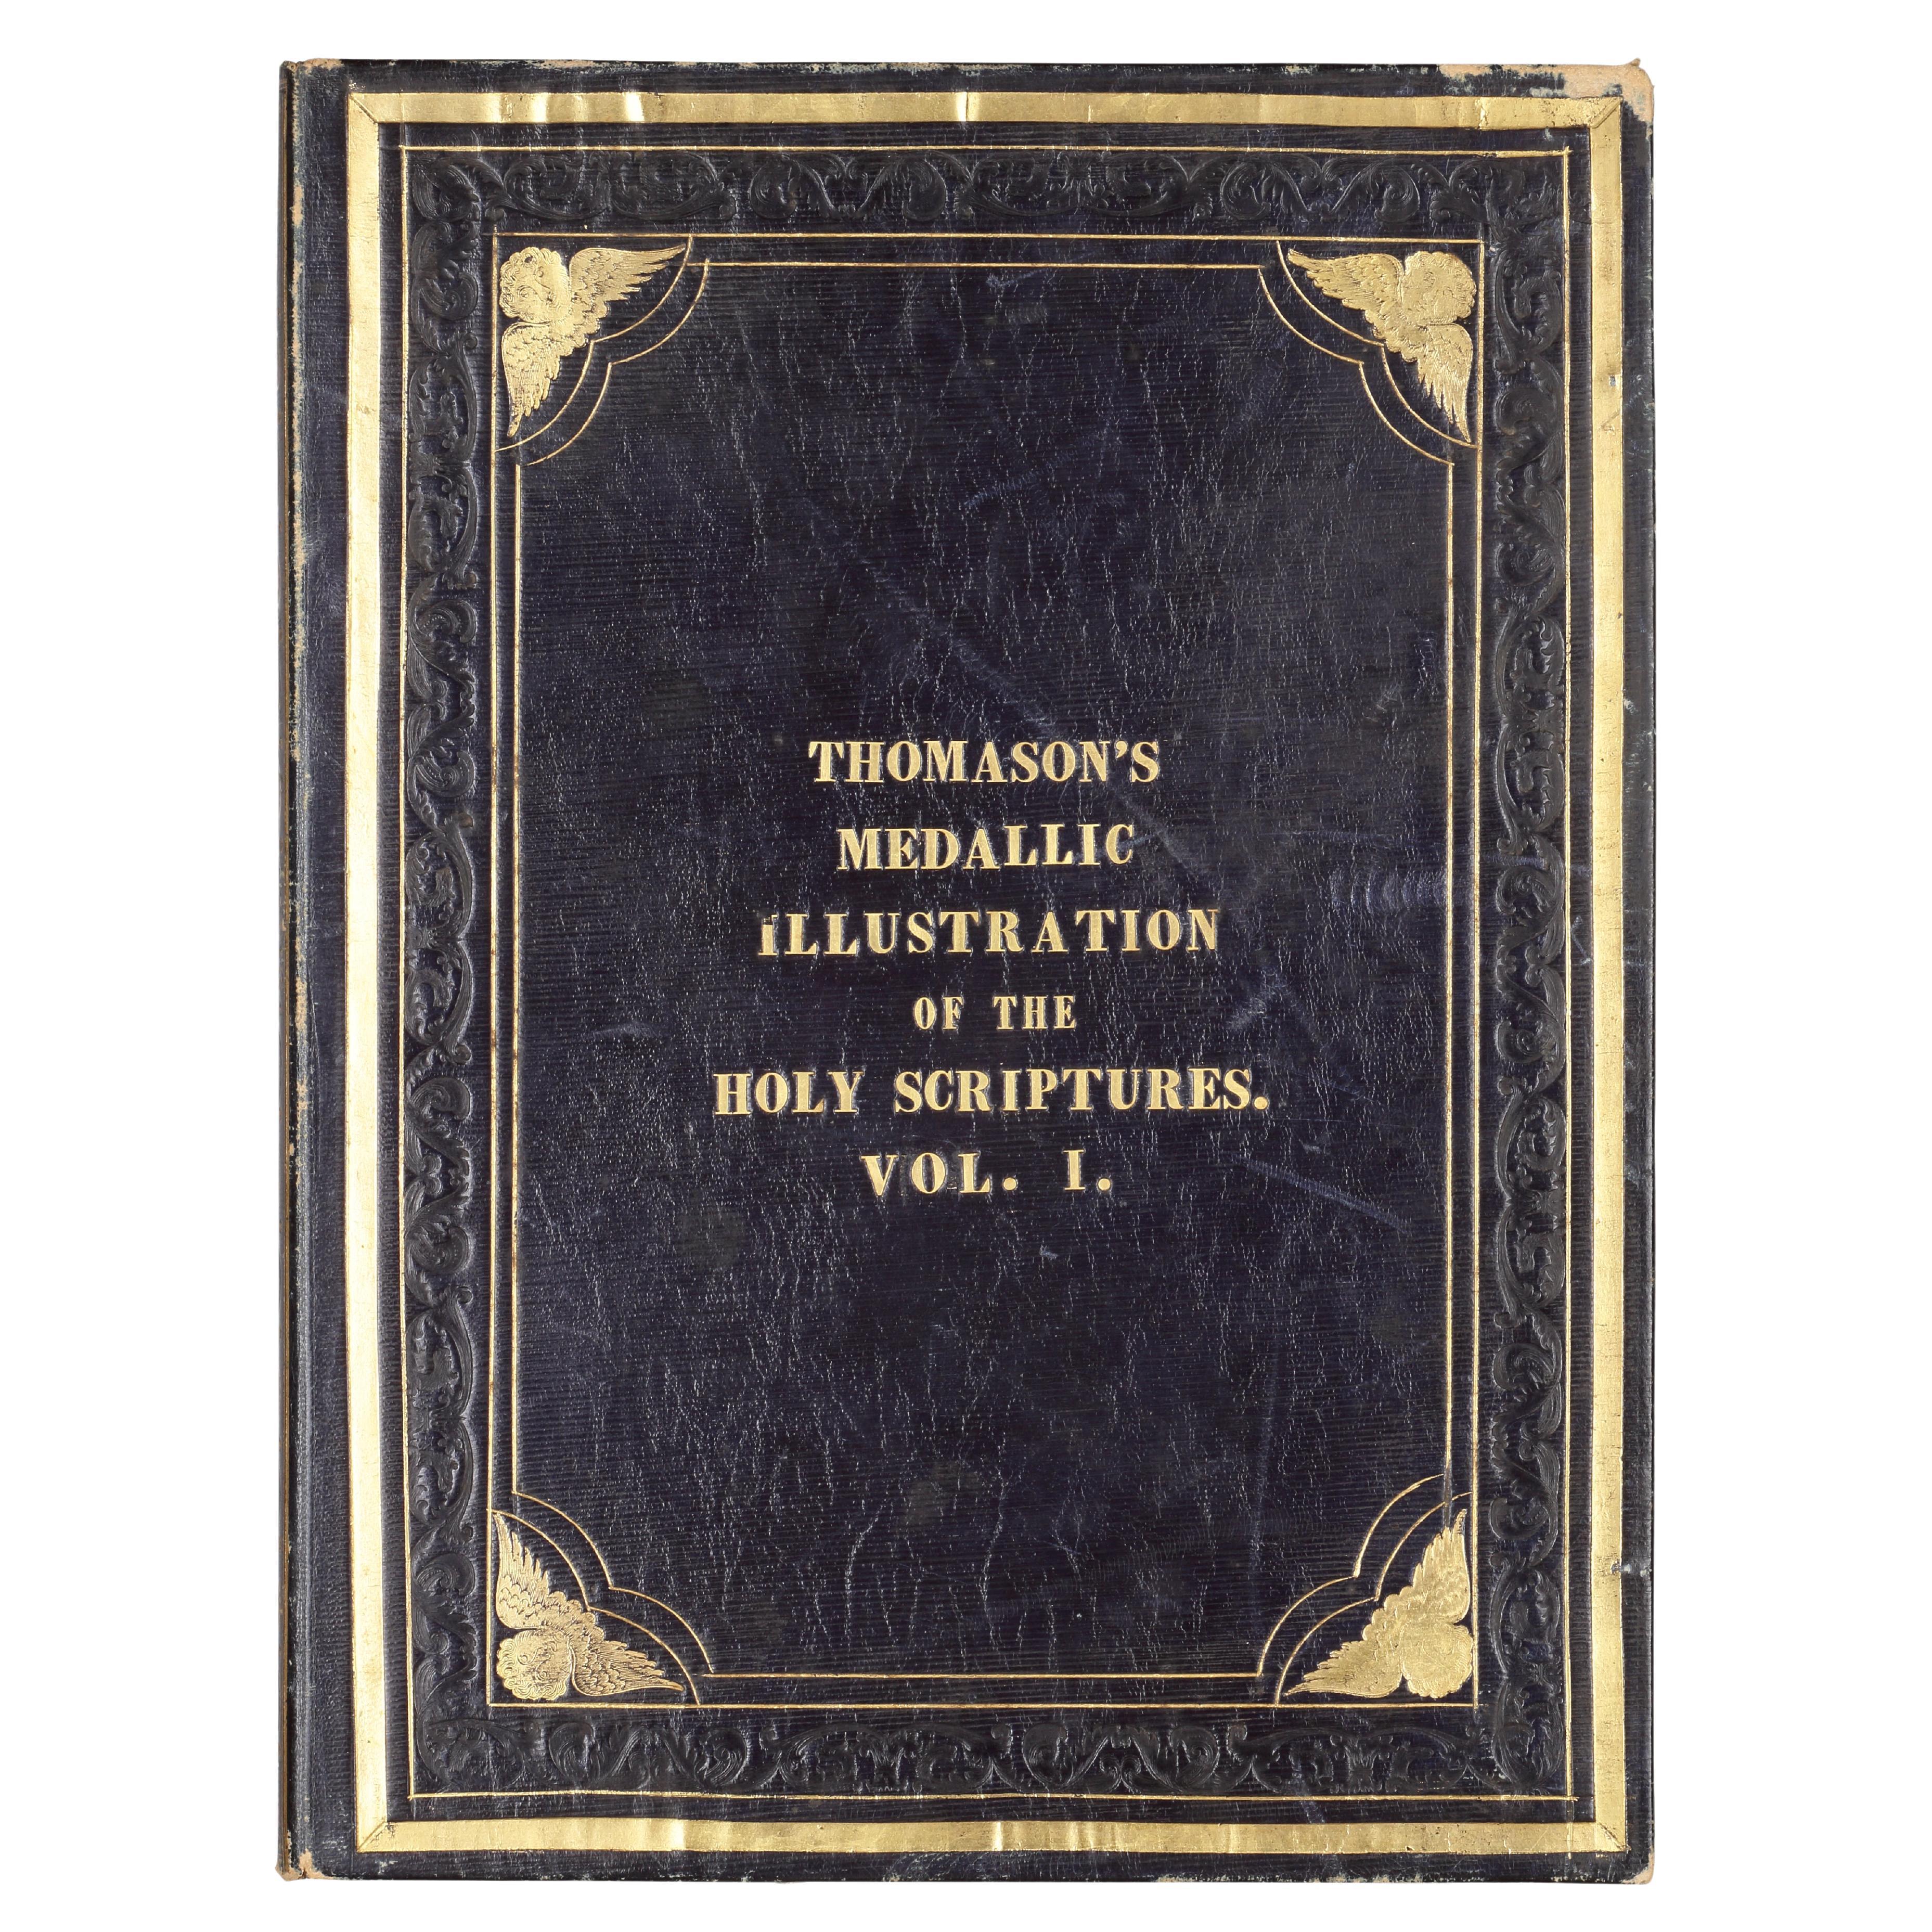 The 'Medallic Illustrations of The Holy Scriptures' von Sir Edward Thomason